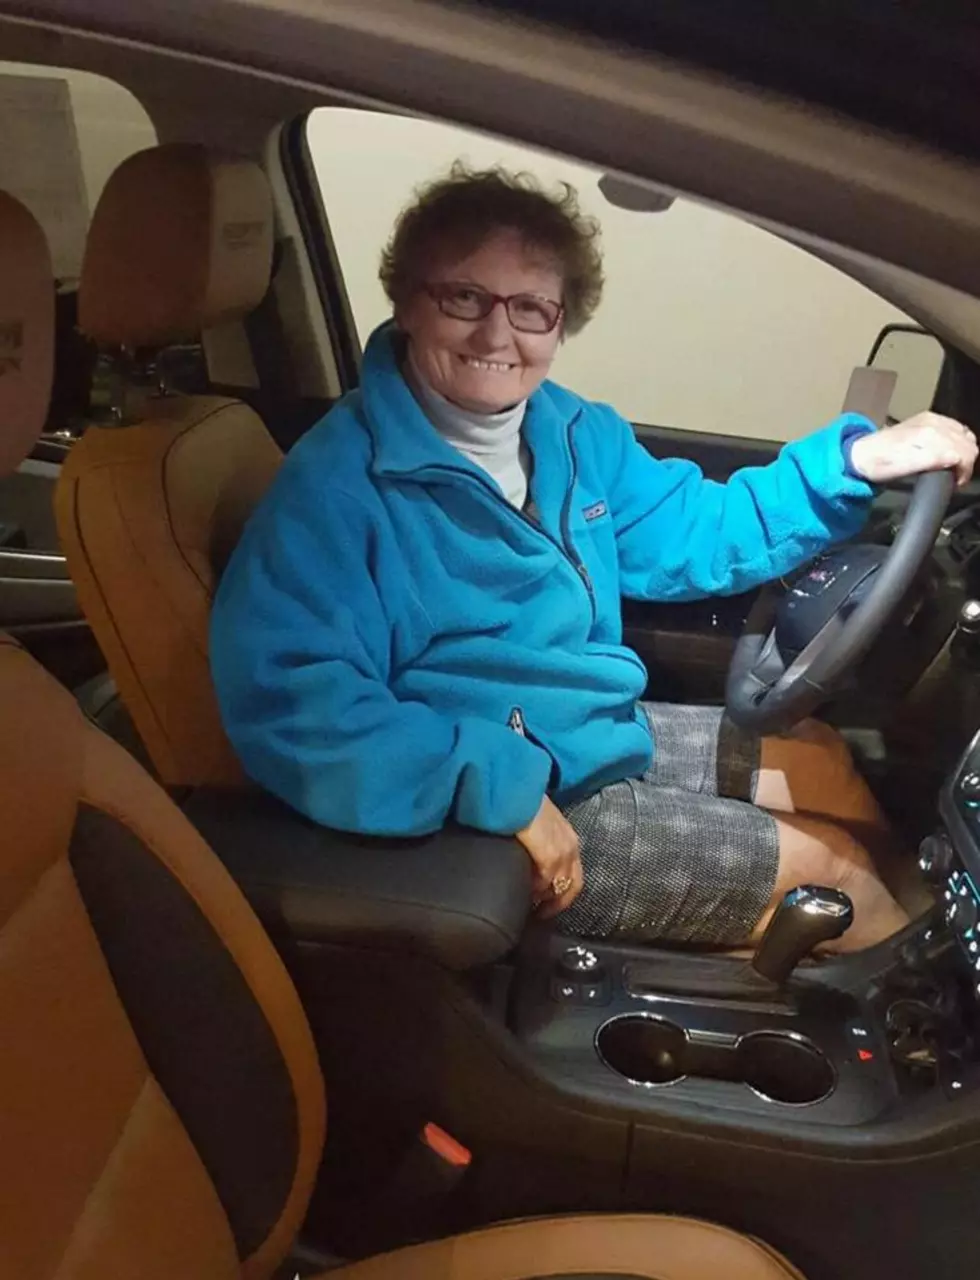 Driver's Ed Teacher Wins Car